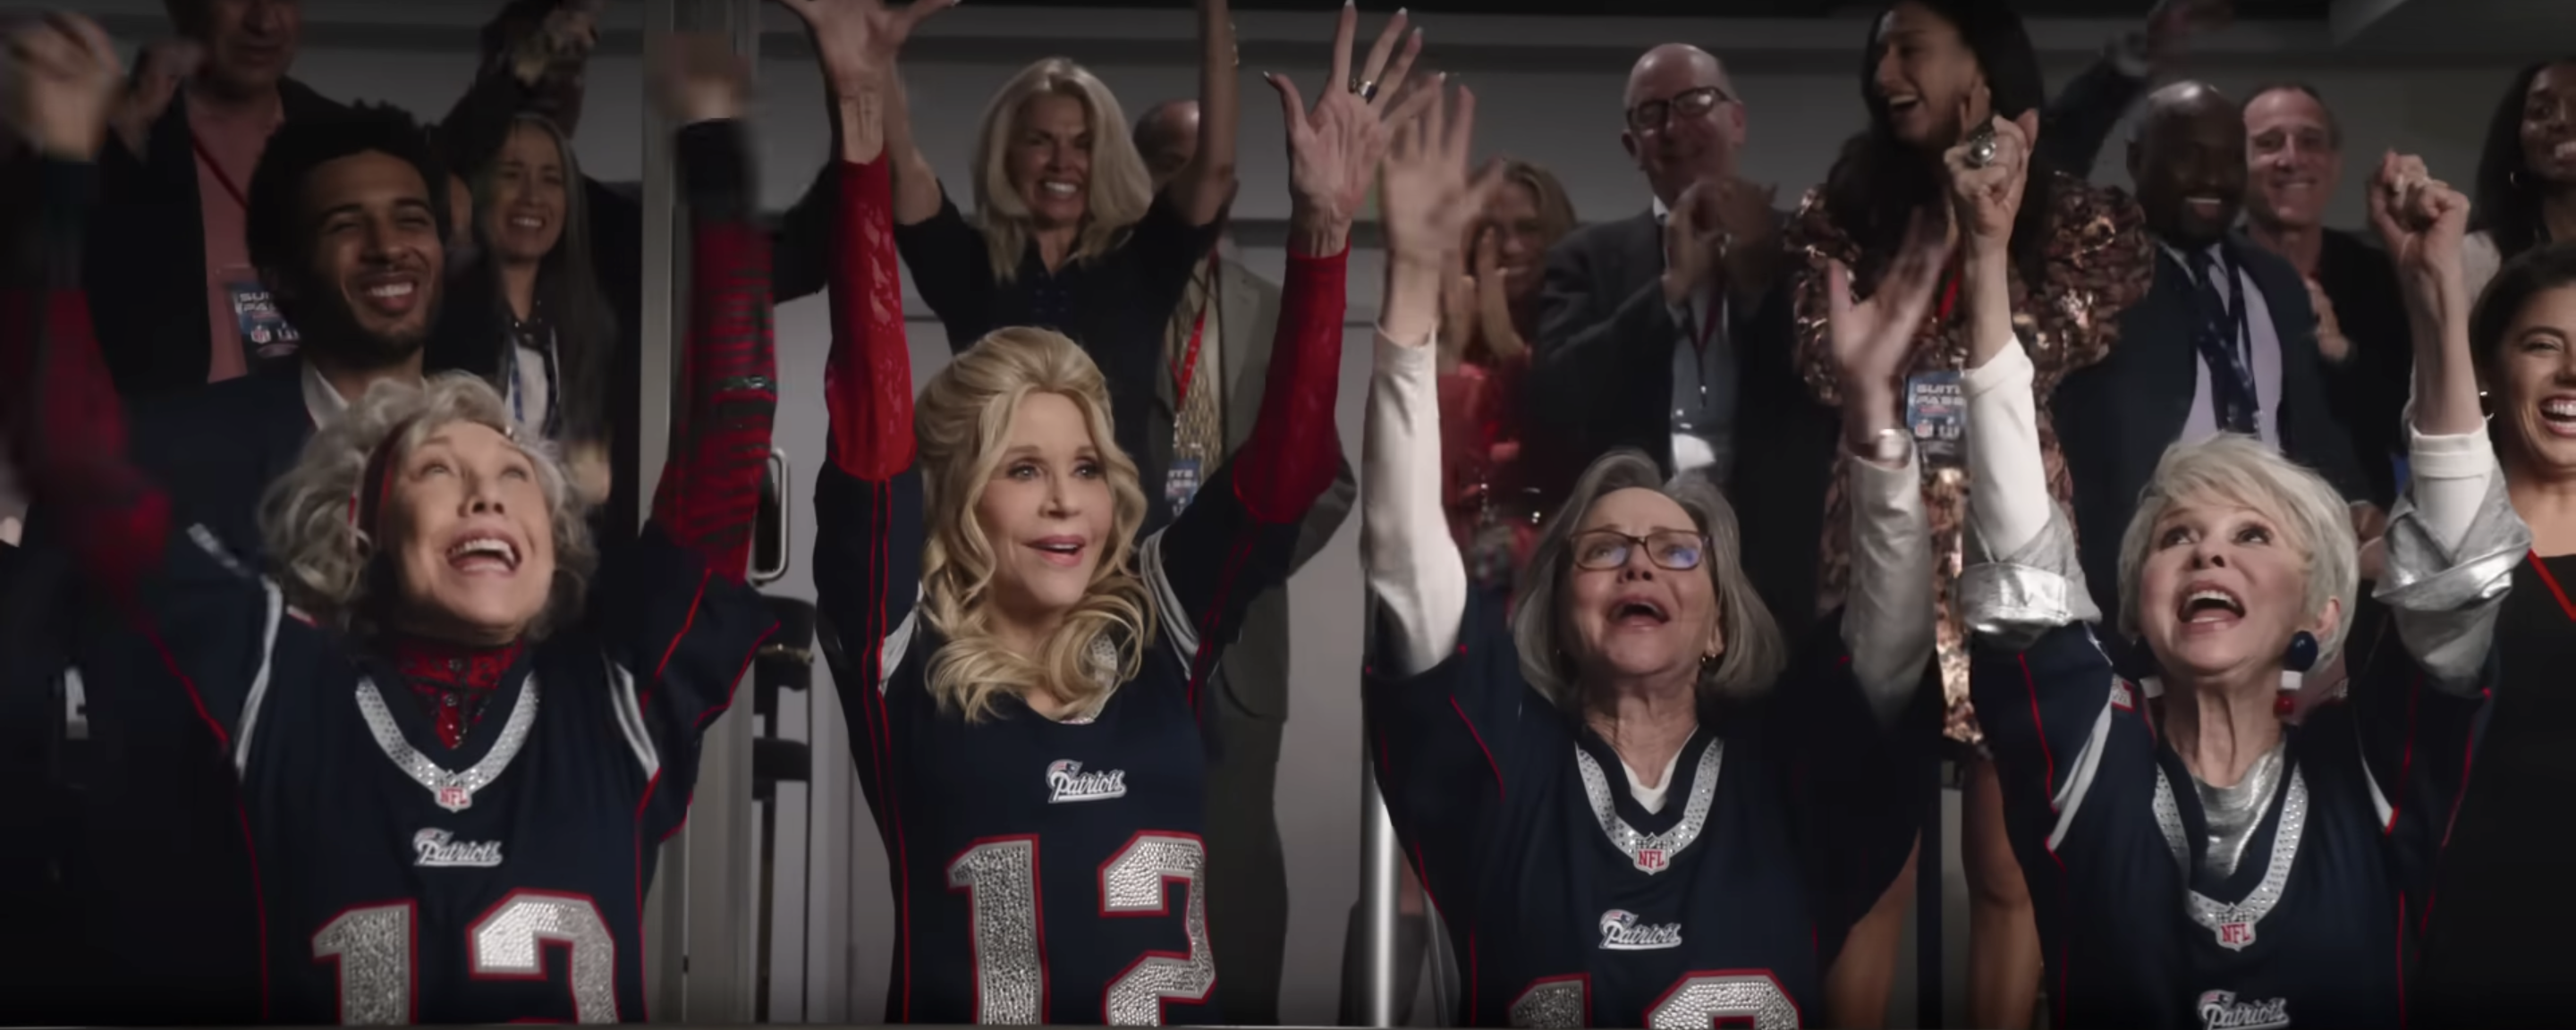 Trailer Watch: Lily Tomlin, Jane Fonda, Rita Moreno, & Sally Field Are Football Diehards in “80 for Brady”